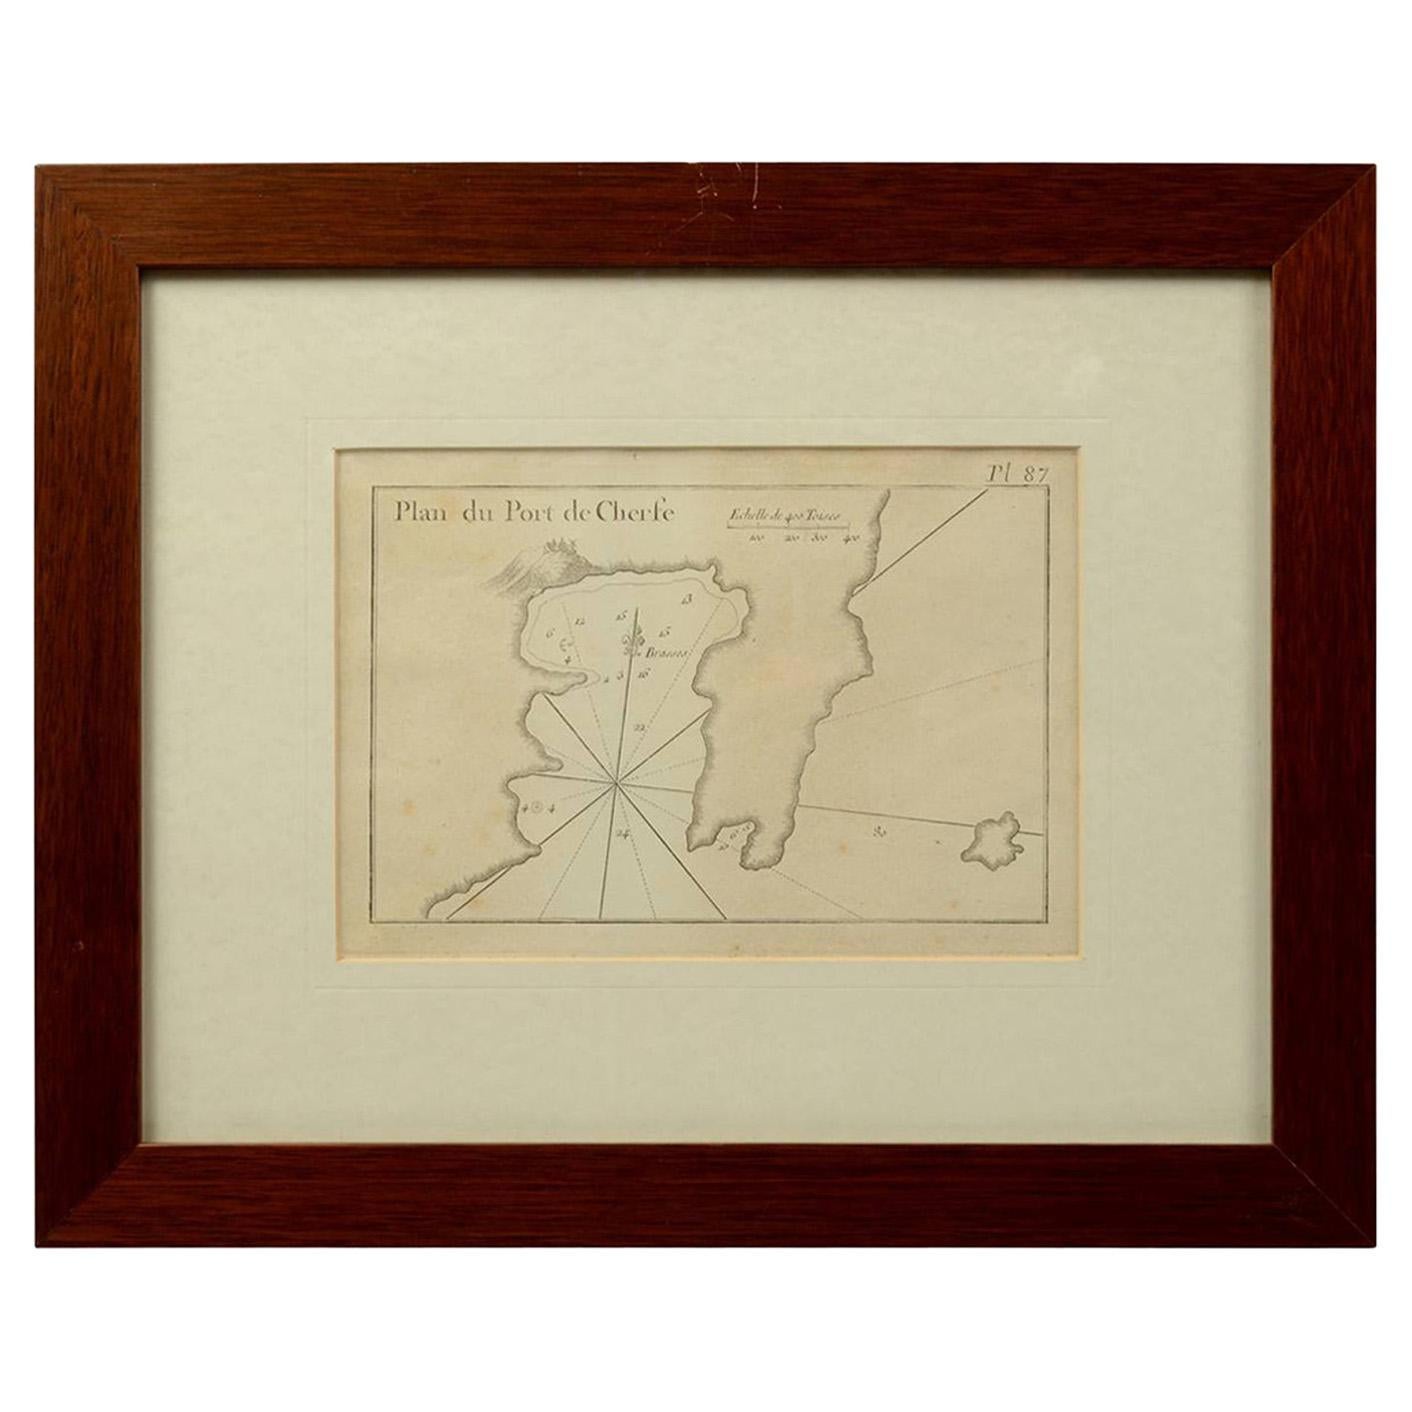 1844 Portolano náutico francés antiguo del Plan du Port de Cherfe de Antoine Roux 